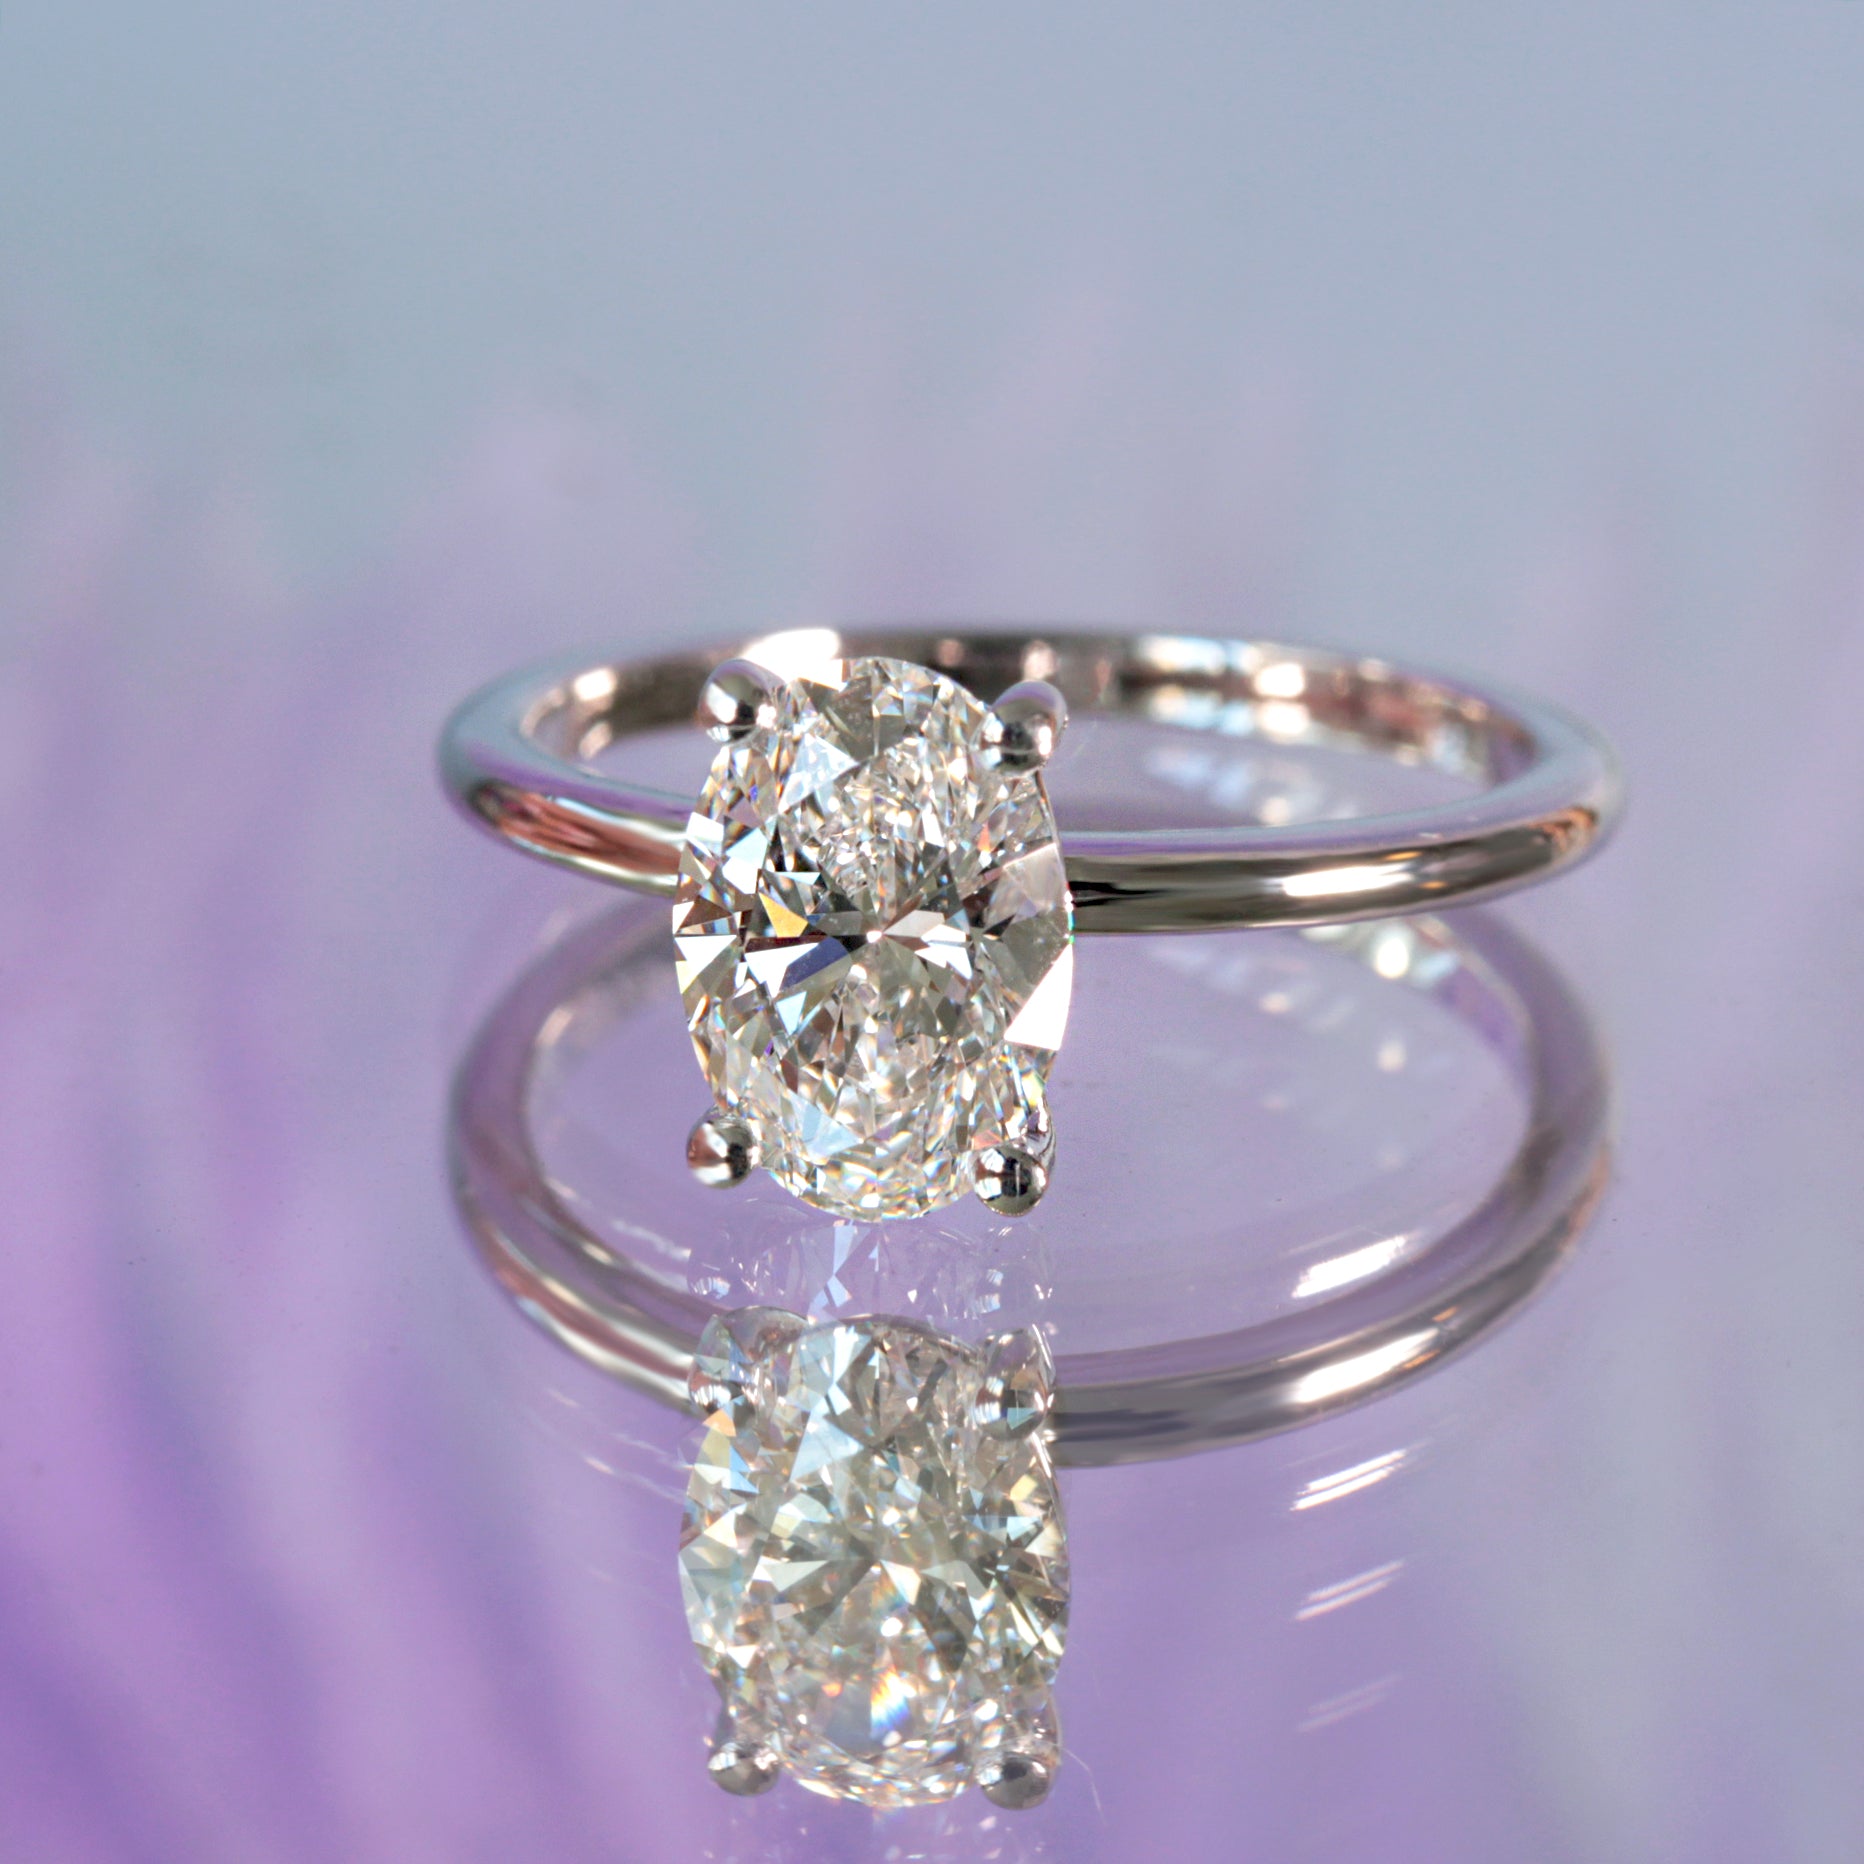 14K white gold oval diamond engagement ring